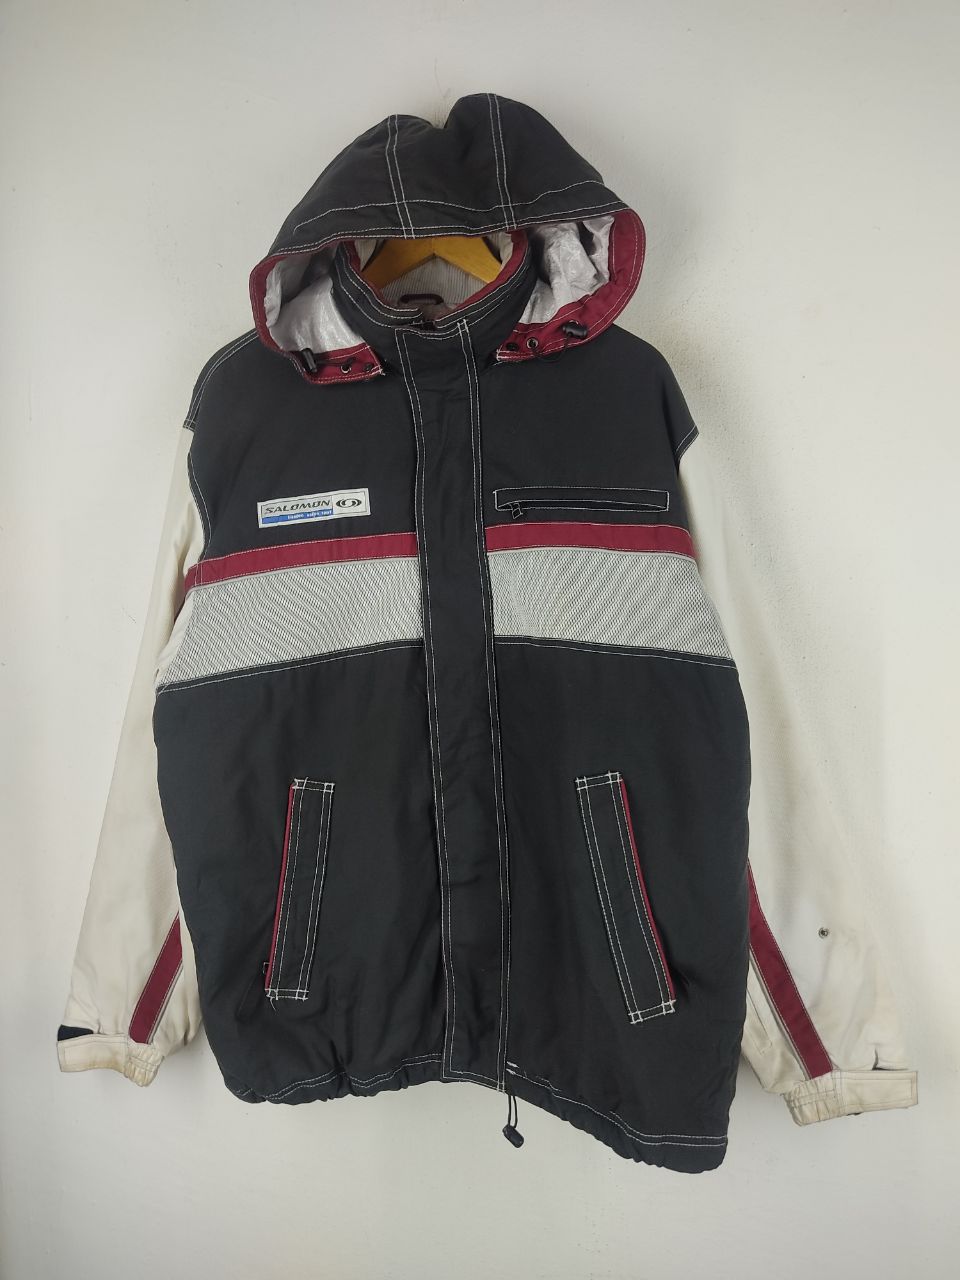 Vintage Salomon Ski Jacket - 1